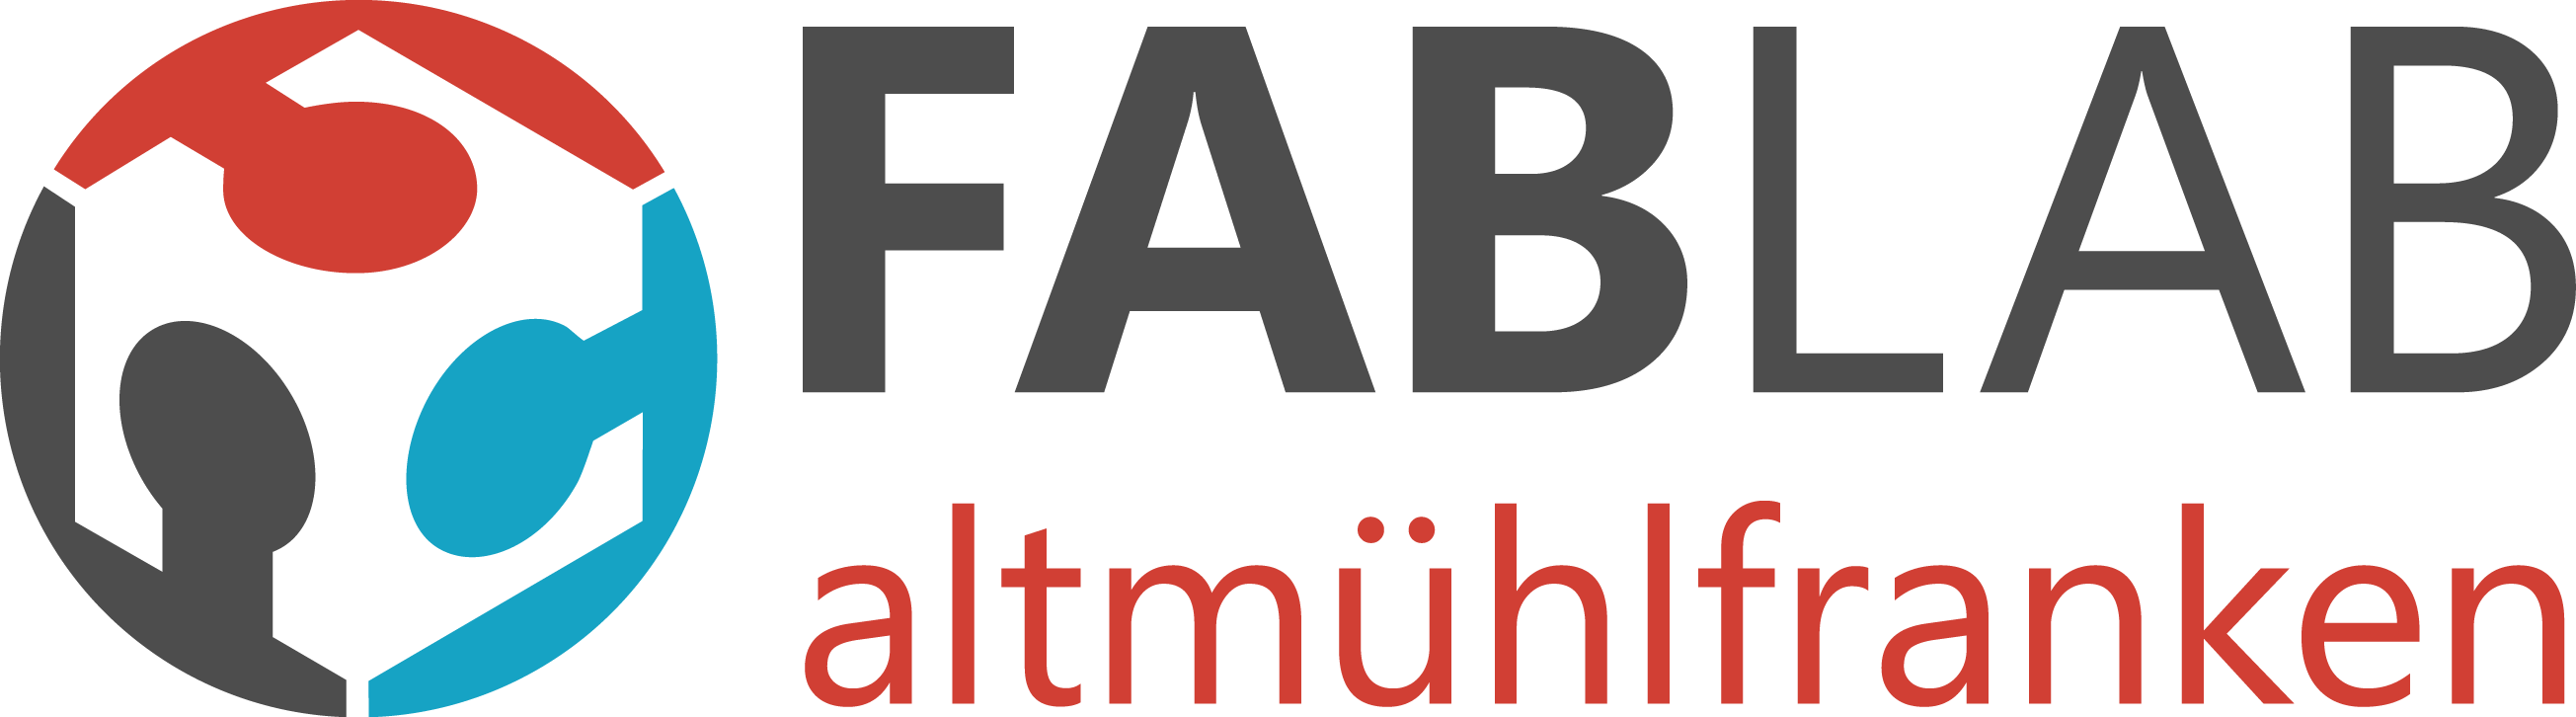 FabLab Altmühlfranken e. V.